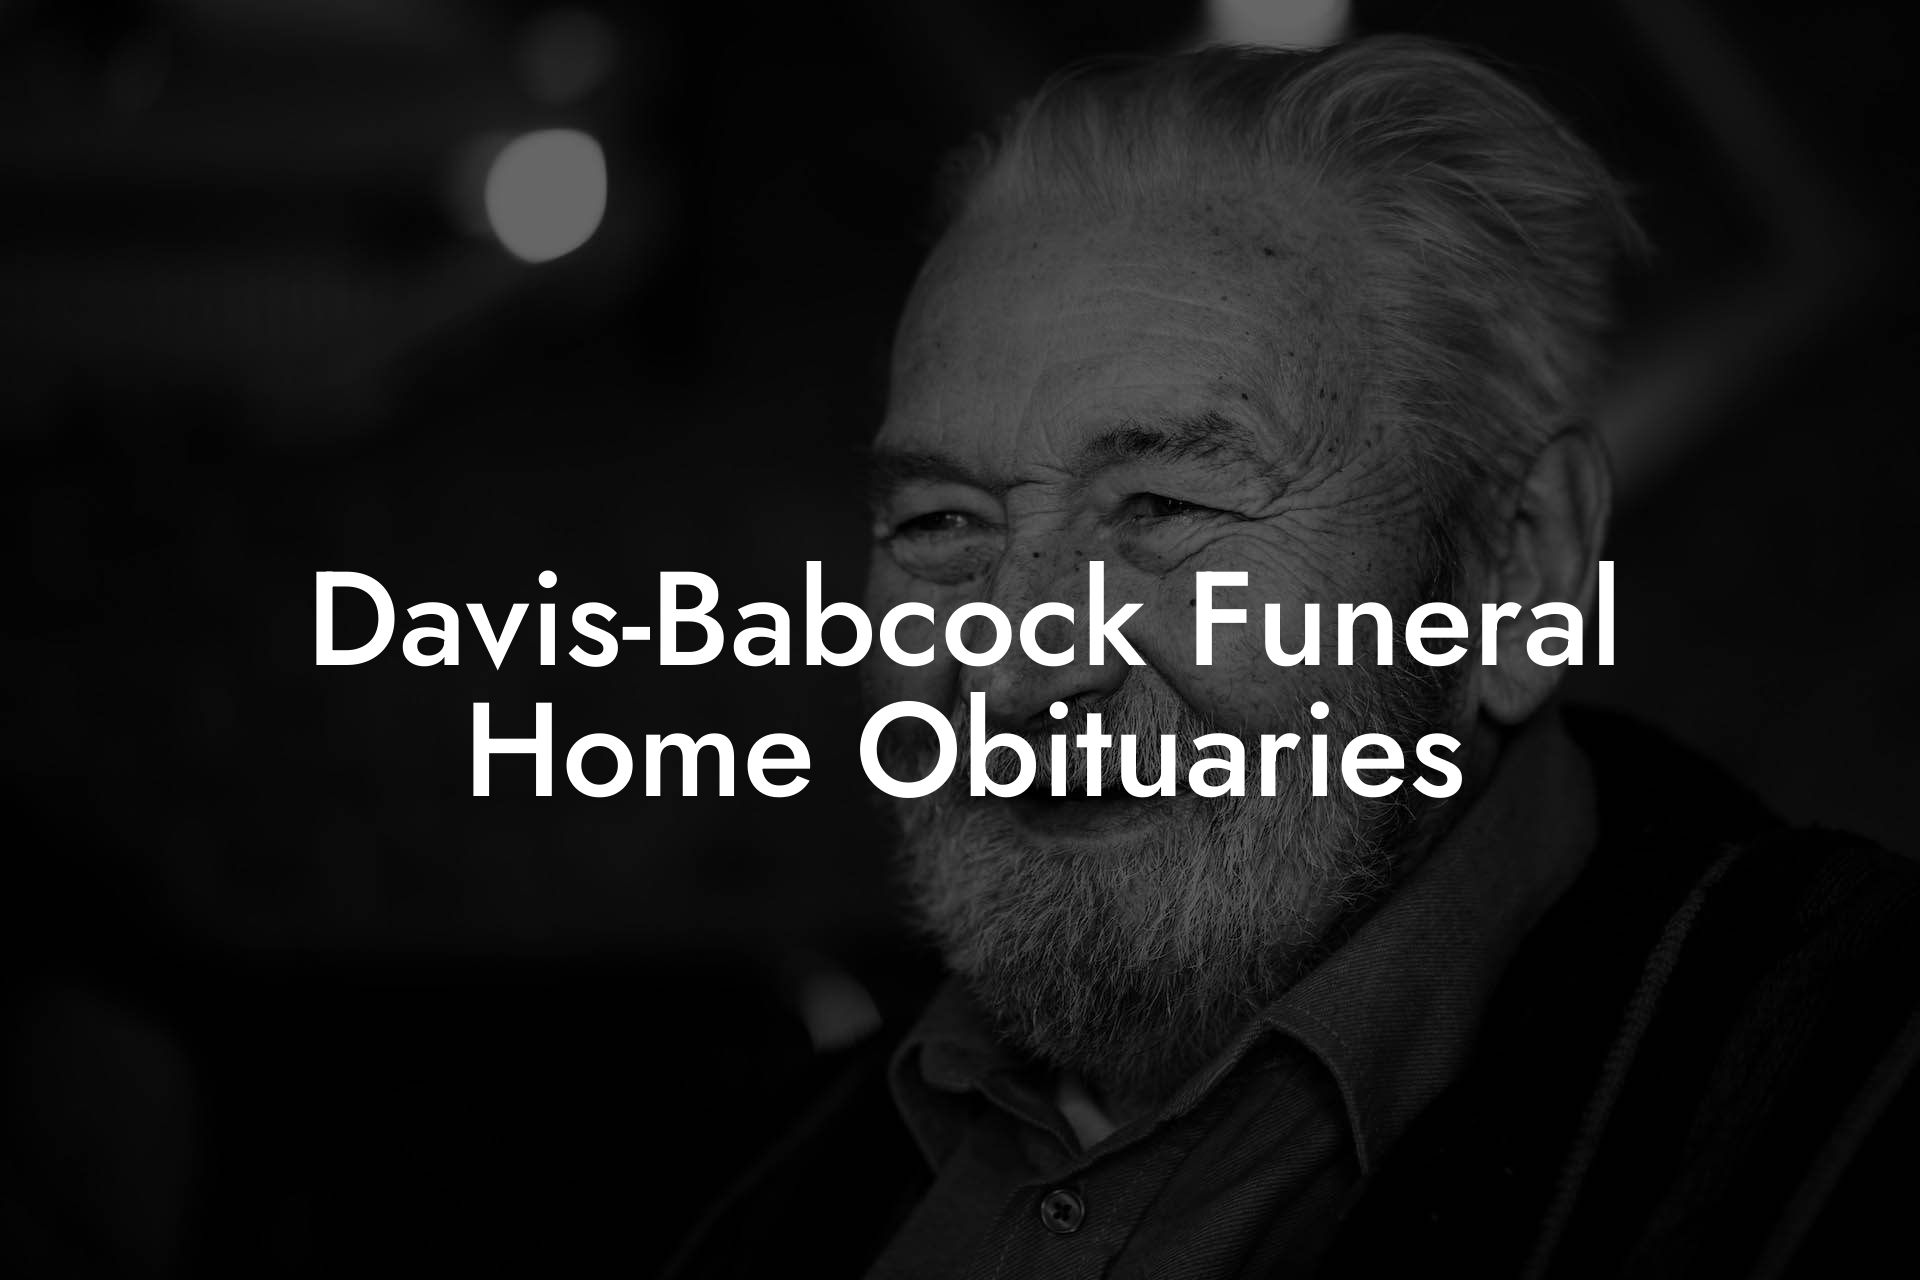 Davis-Babcock Funeral Home Obituaries